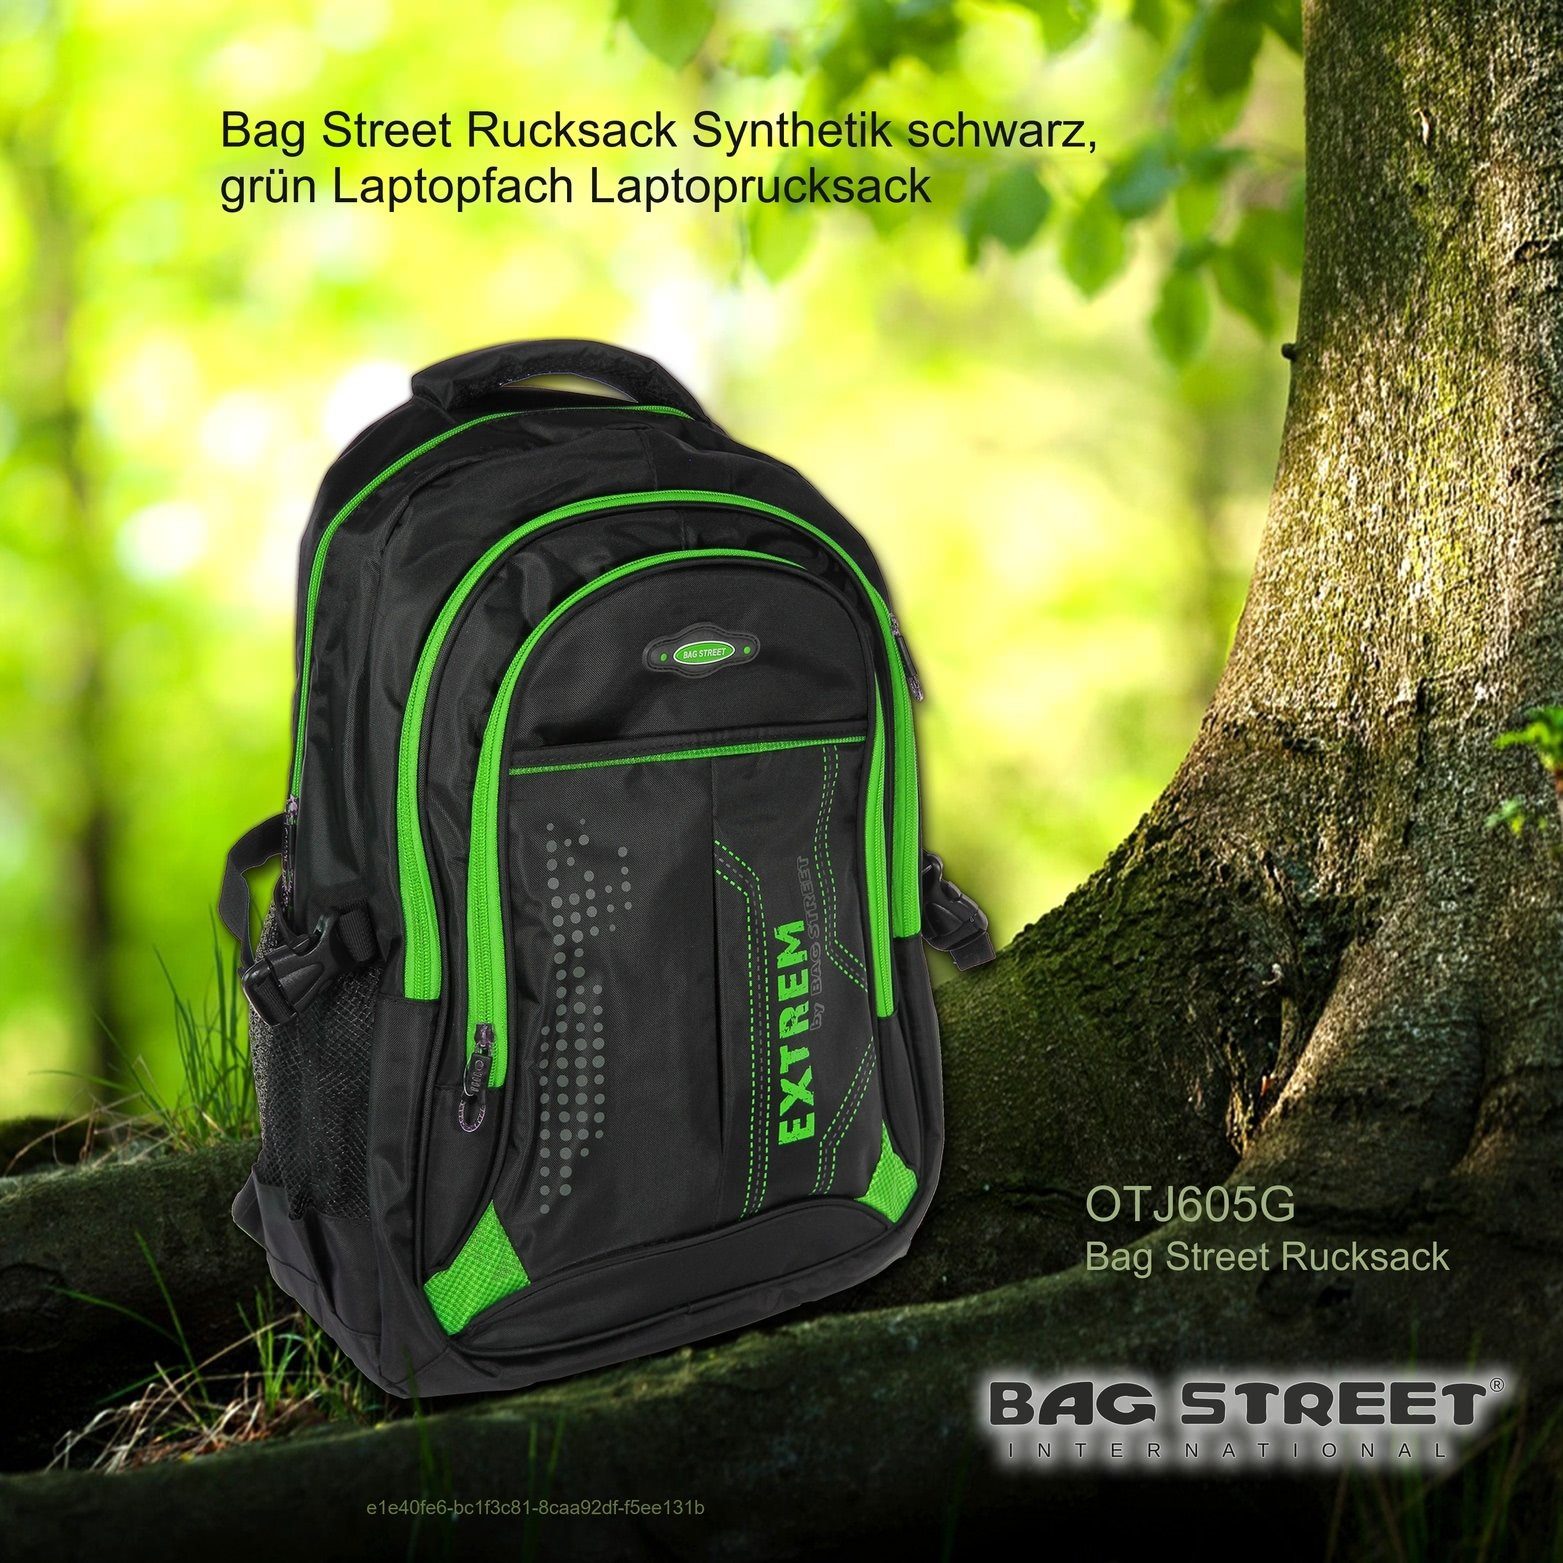 BAG STREET Freizeitrucksack Bag Street Synthetik, ca Freizeitrucksack, (Freizeitrucksack), Sportrucksack 30cm Herren Sporttasche Damen ca. schwarz, grün x